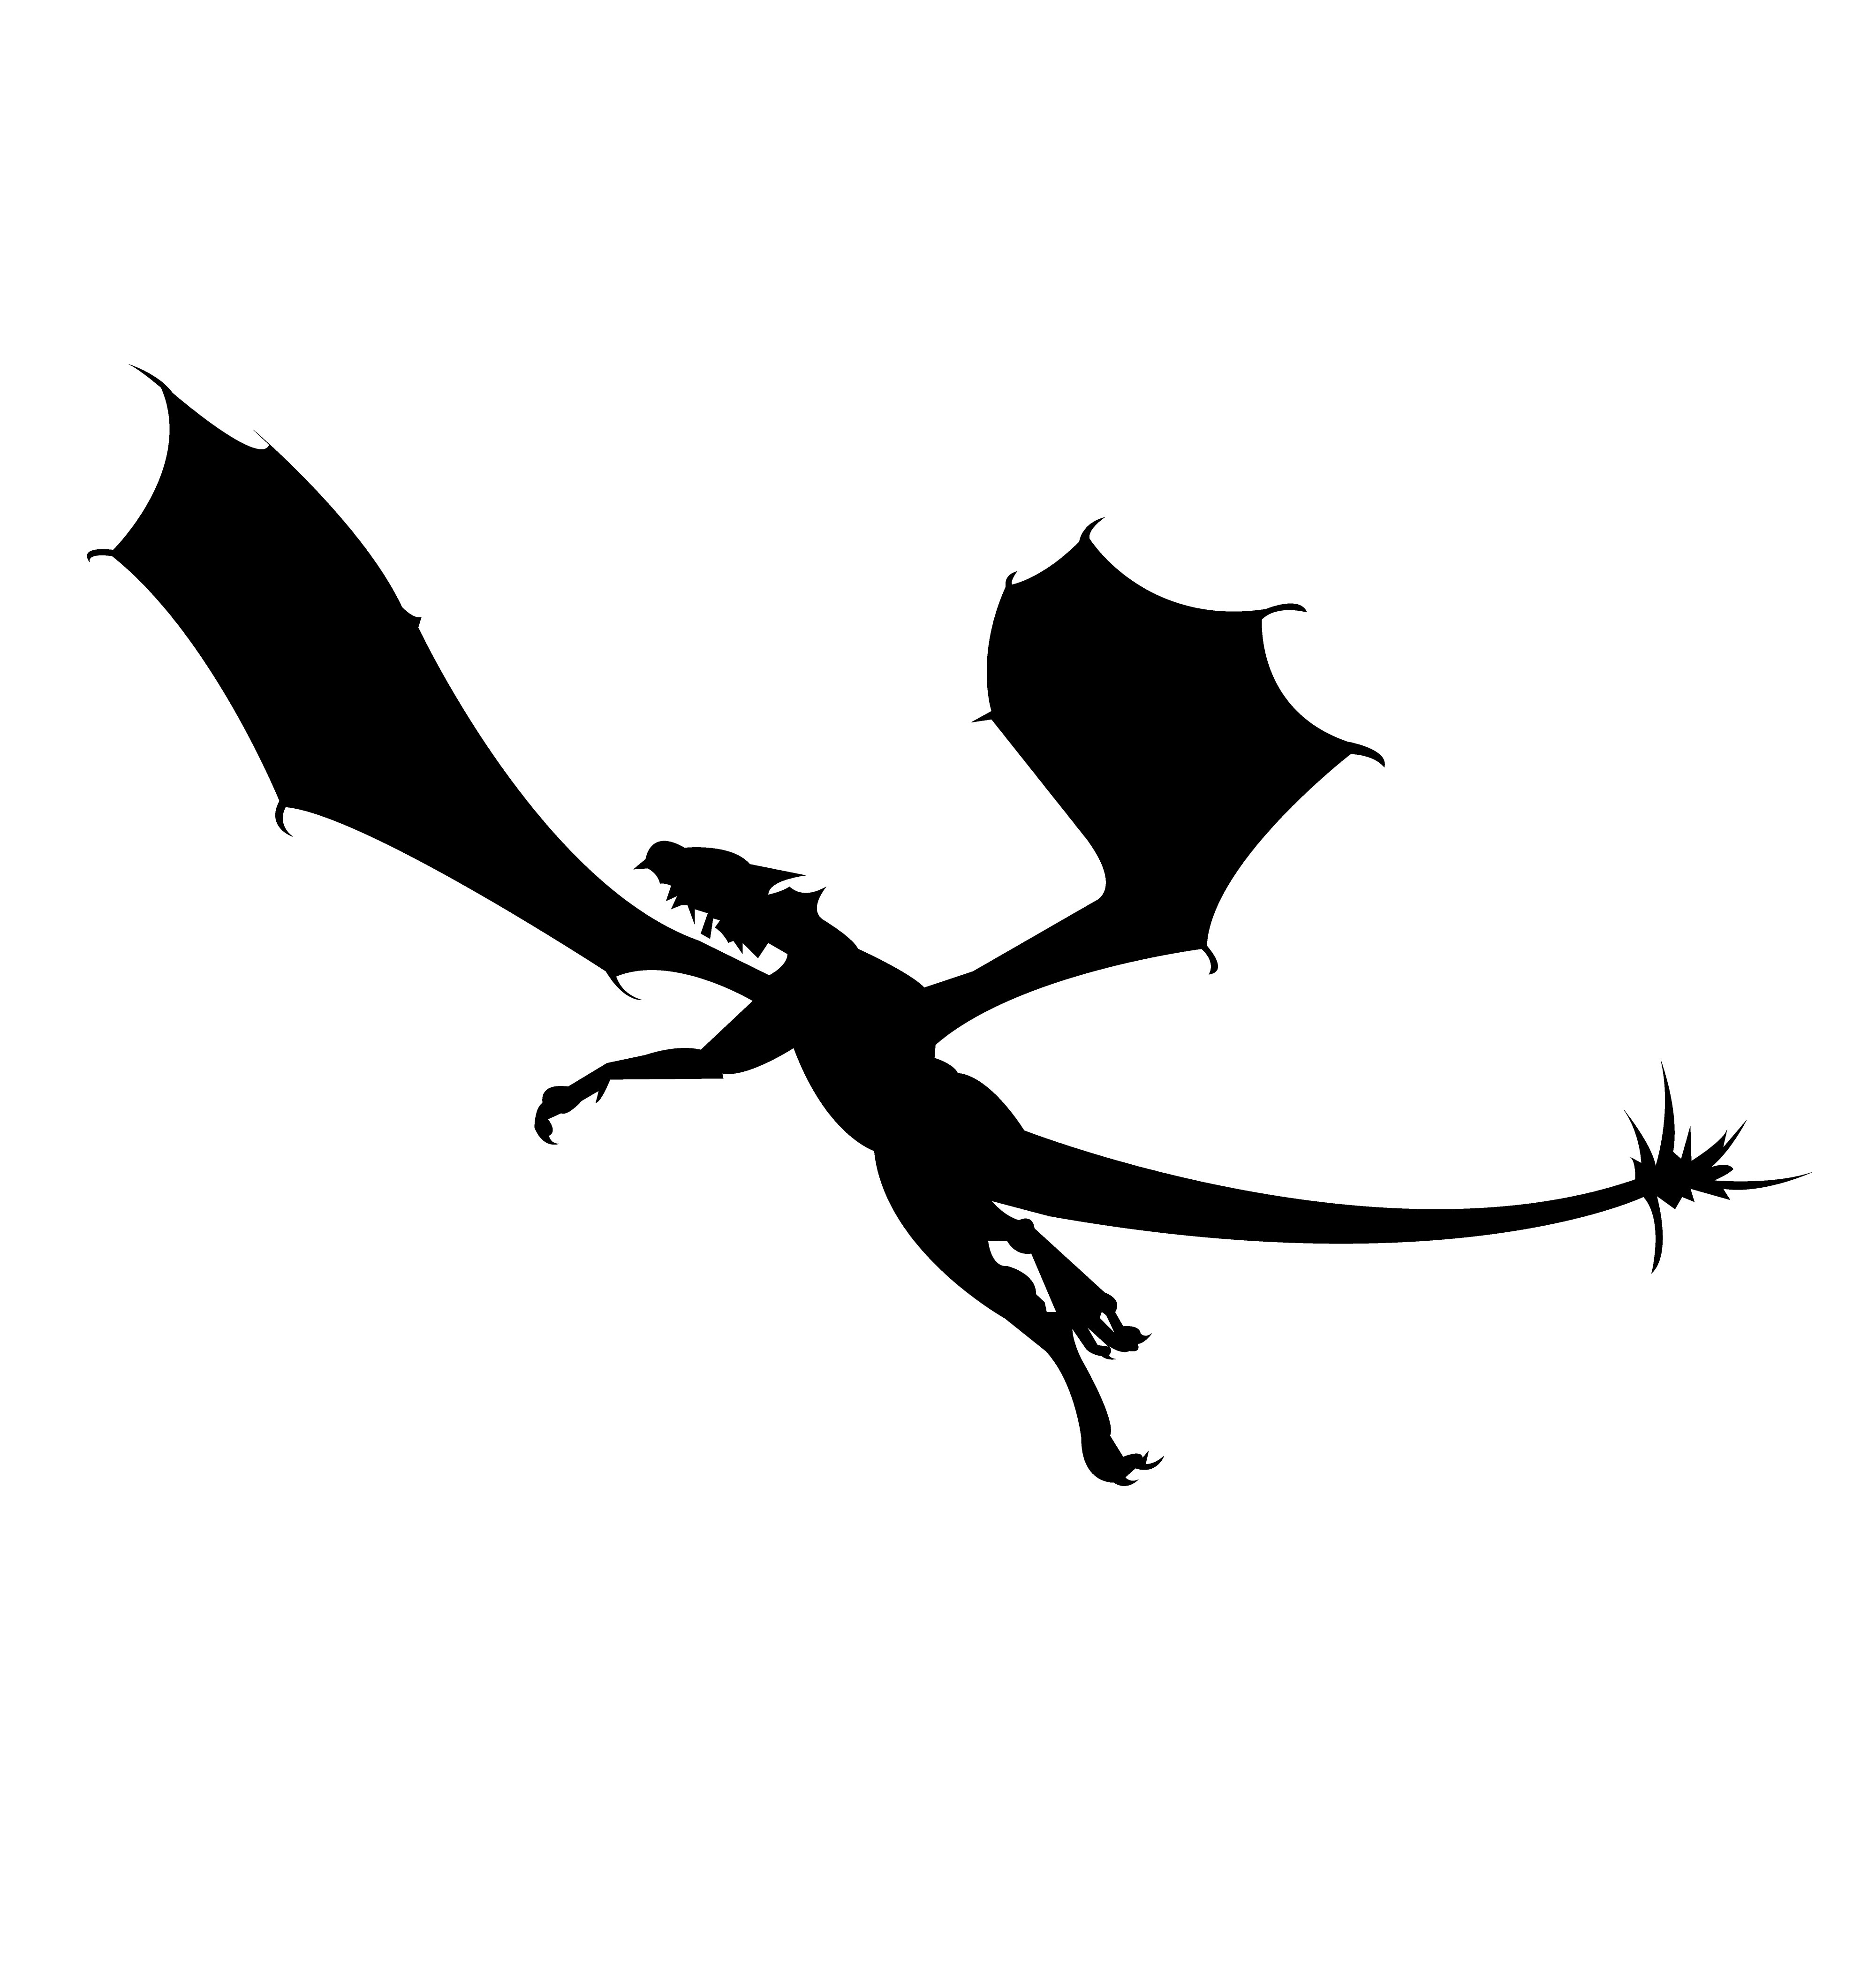 Download Black dragon silhouette - Download Free Vectors, Clipart Graphics & Vector Art